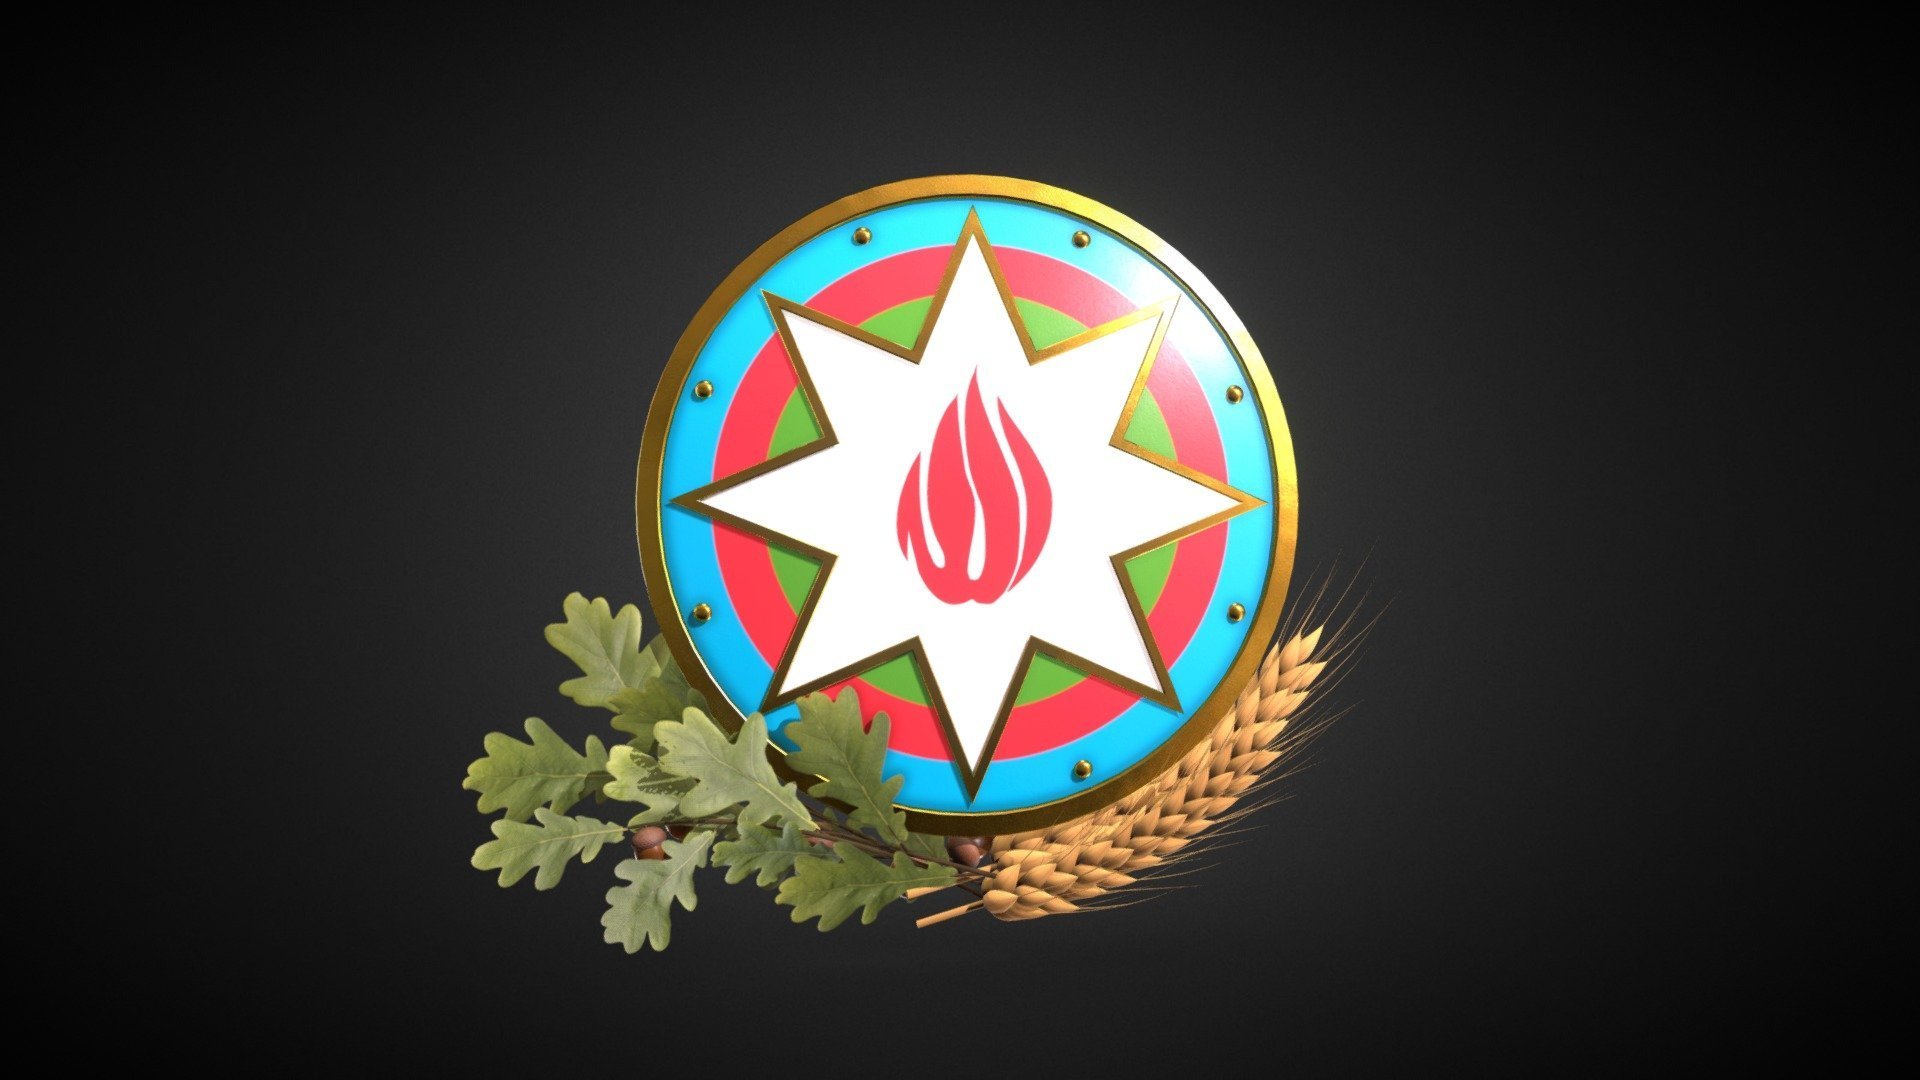 герб азербайджана